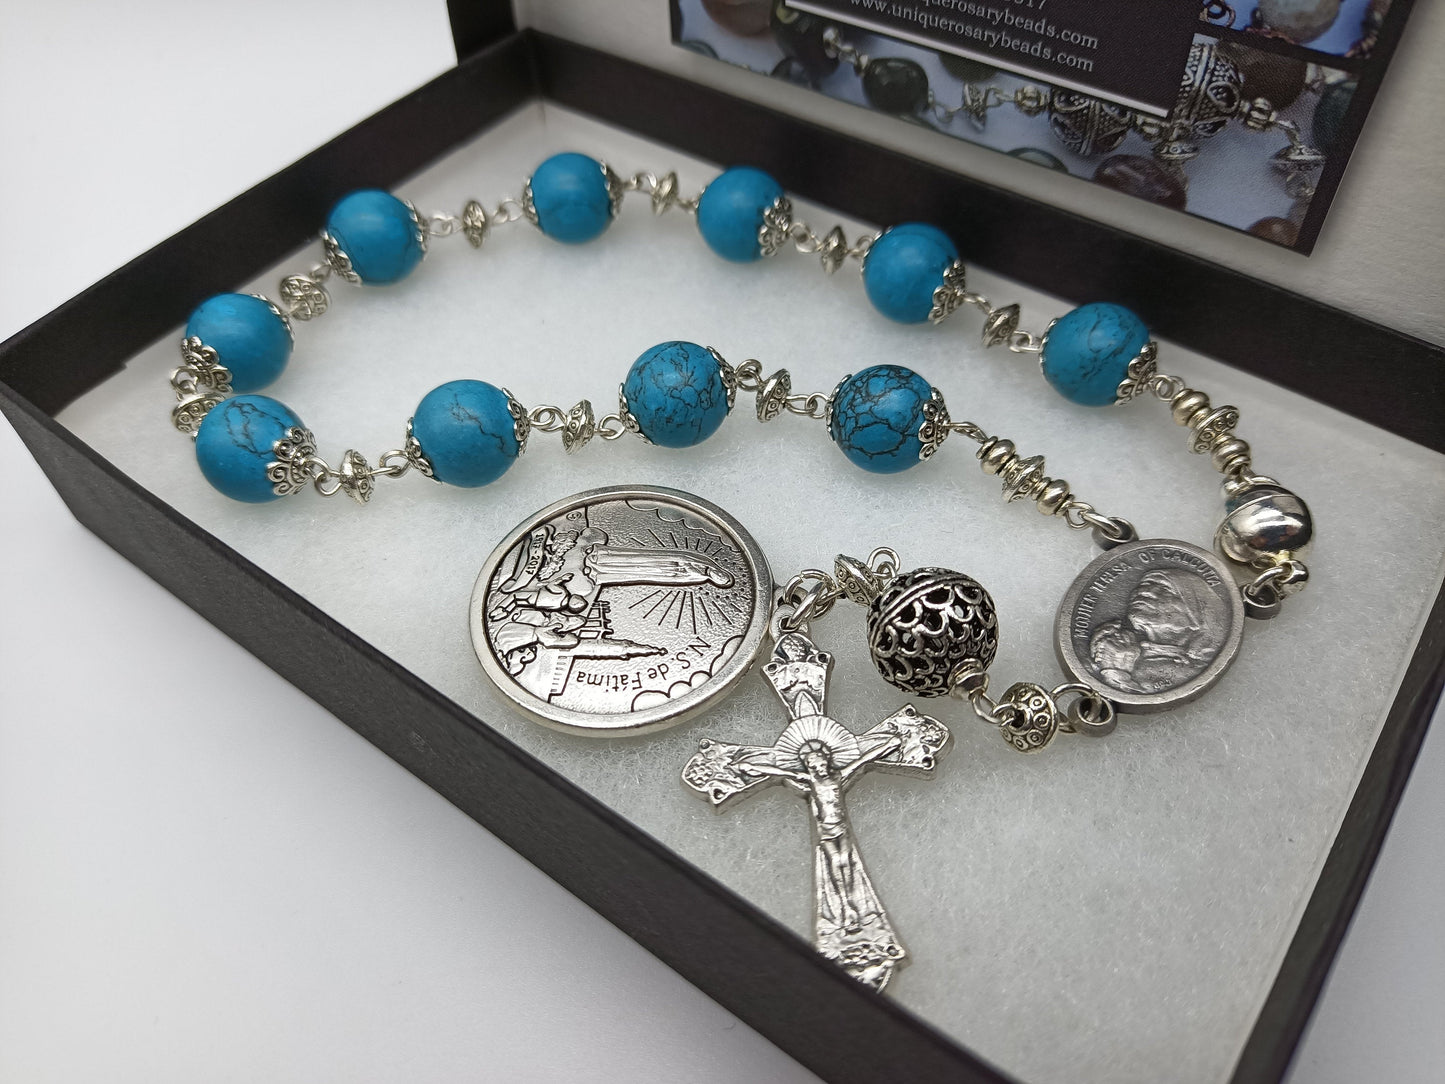 Fatima Centennial medal Car visor Decade Rosary beads, Saint Teresa of Calcutta, Sacred Heart of Jesus medal Rosaries, Pocket Rosaries.